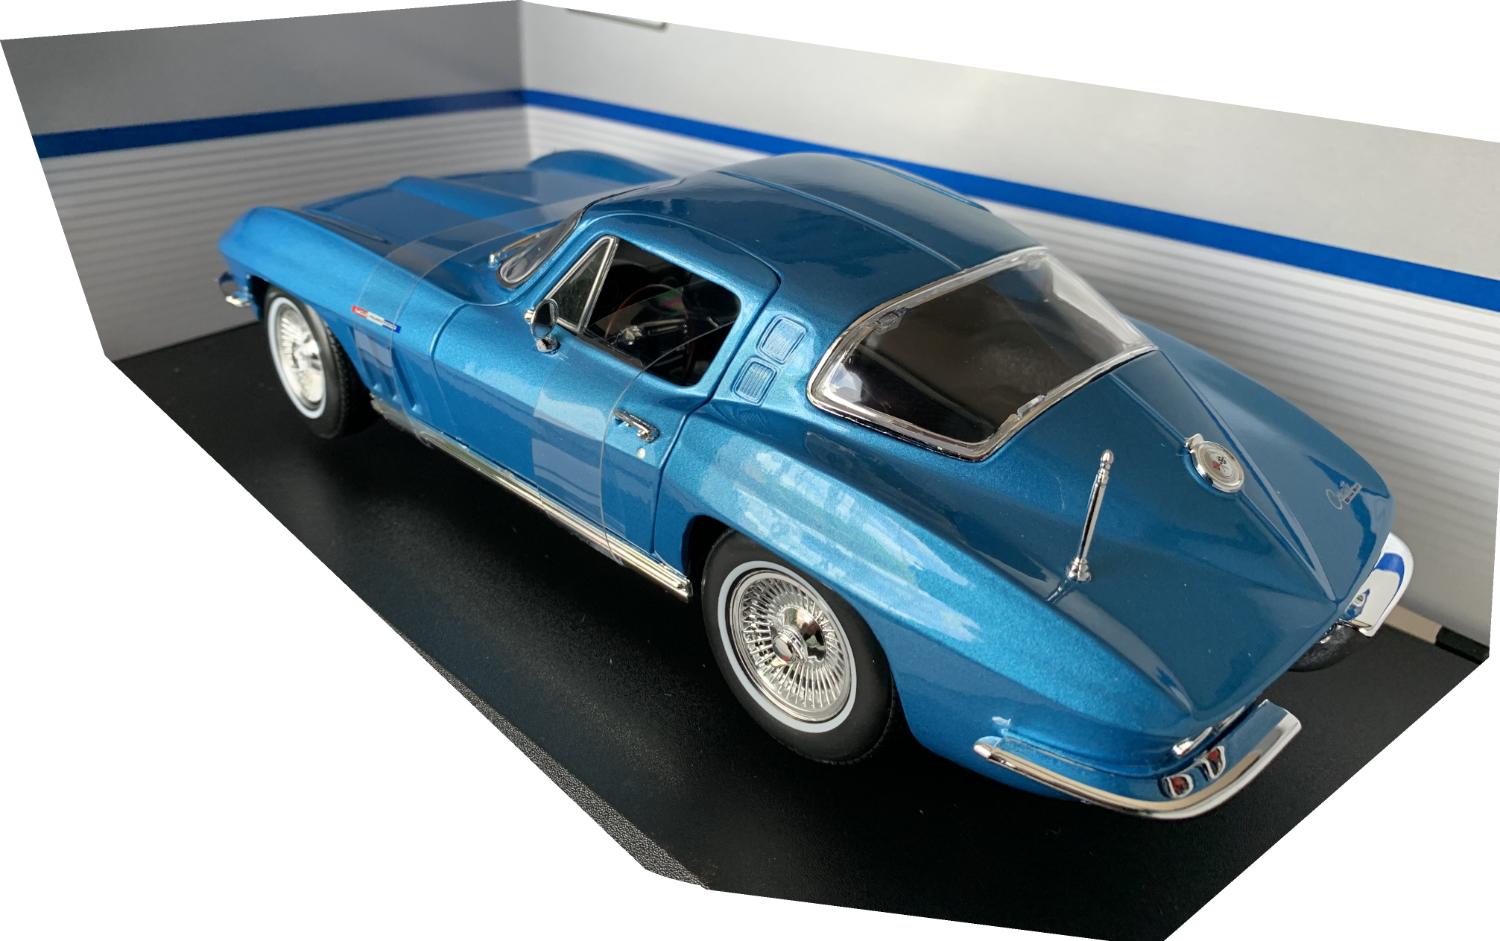 Chevrolet Corvette 1965 in metallic blue 1:18 scale model from Maisto